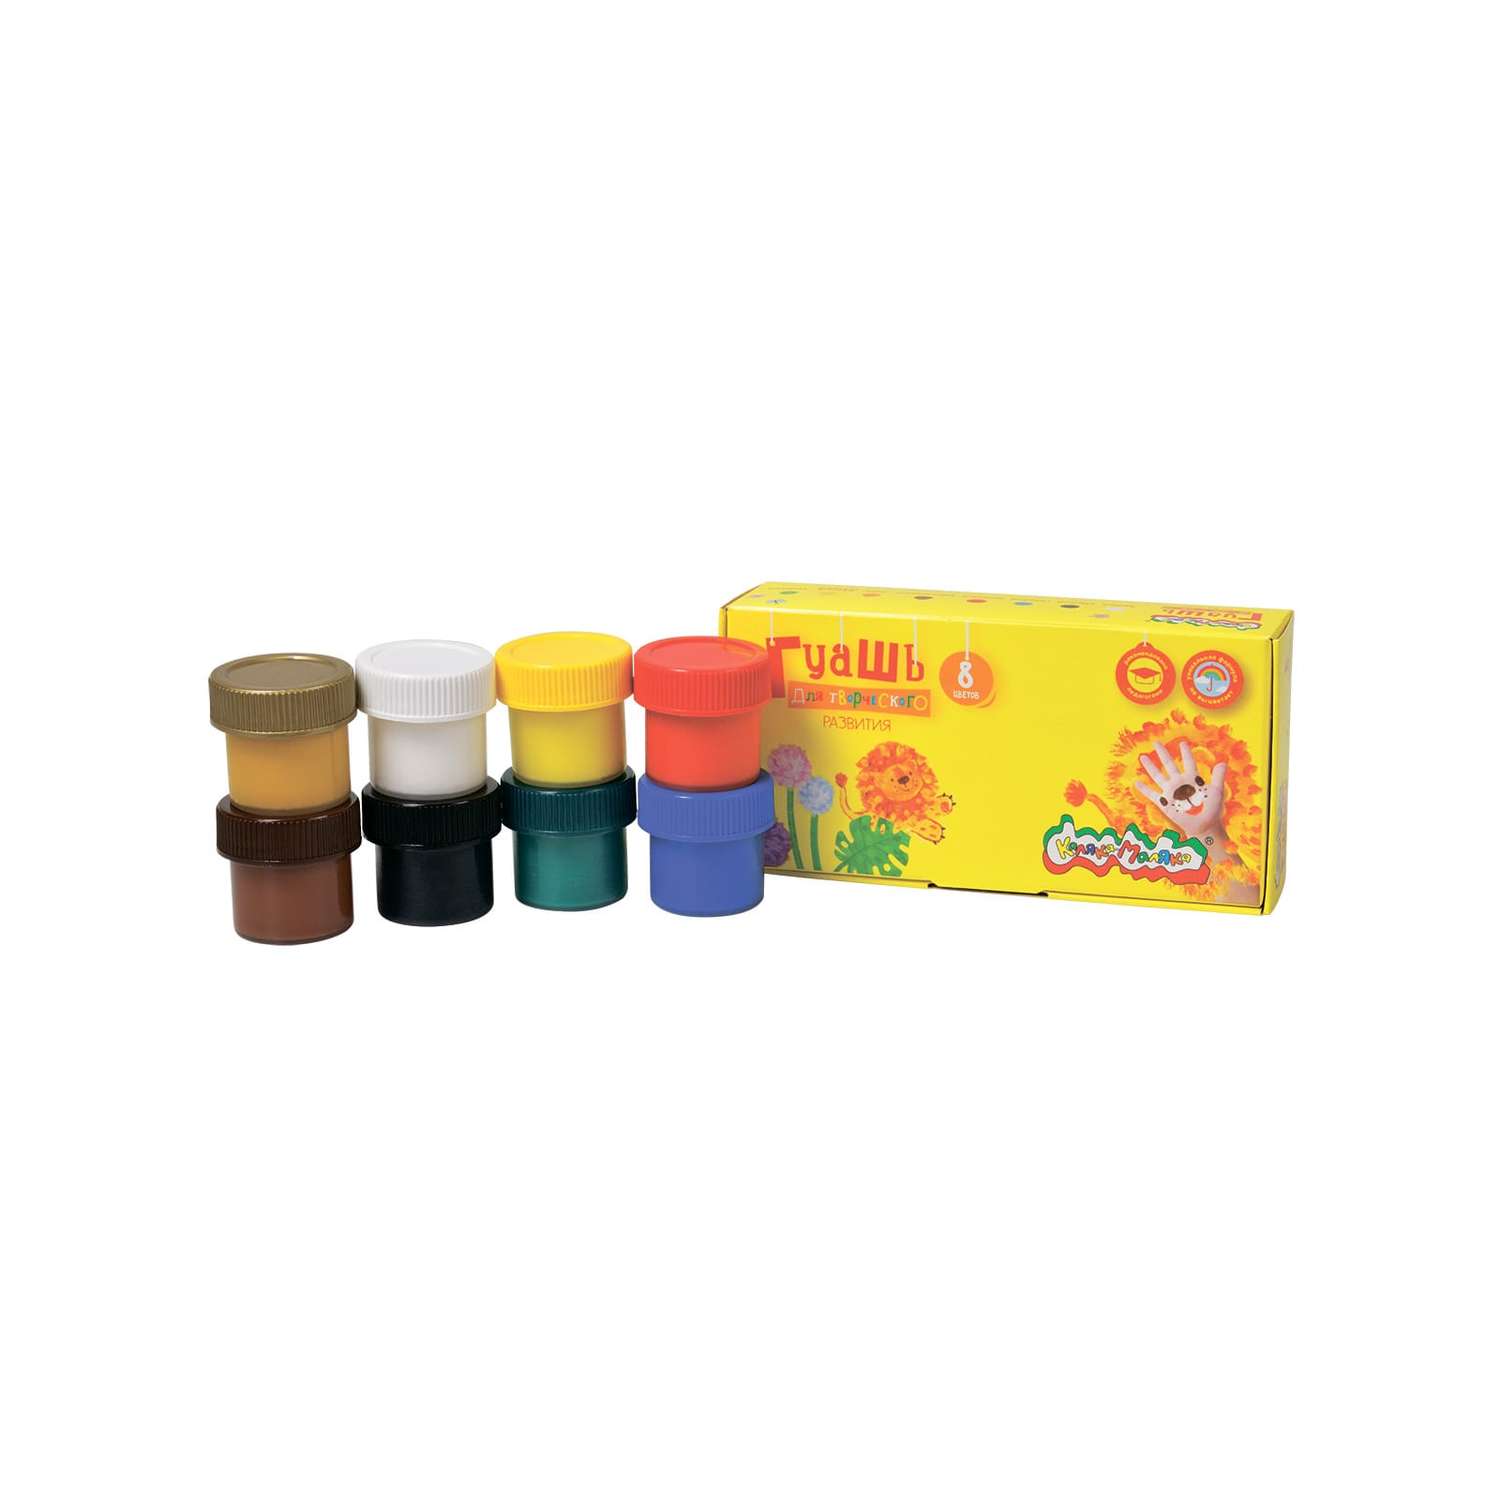 Краски гуашевые Каляка-Маляка детские 175 мл набор 8 цветов для творческого развития - фото 1